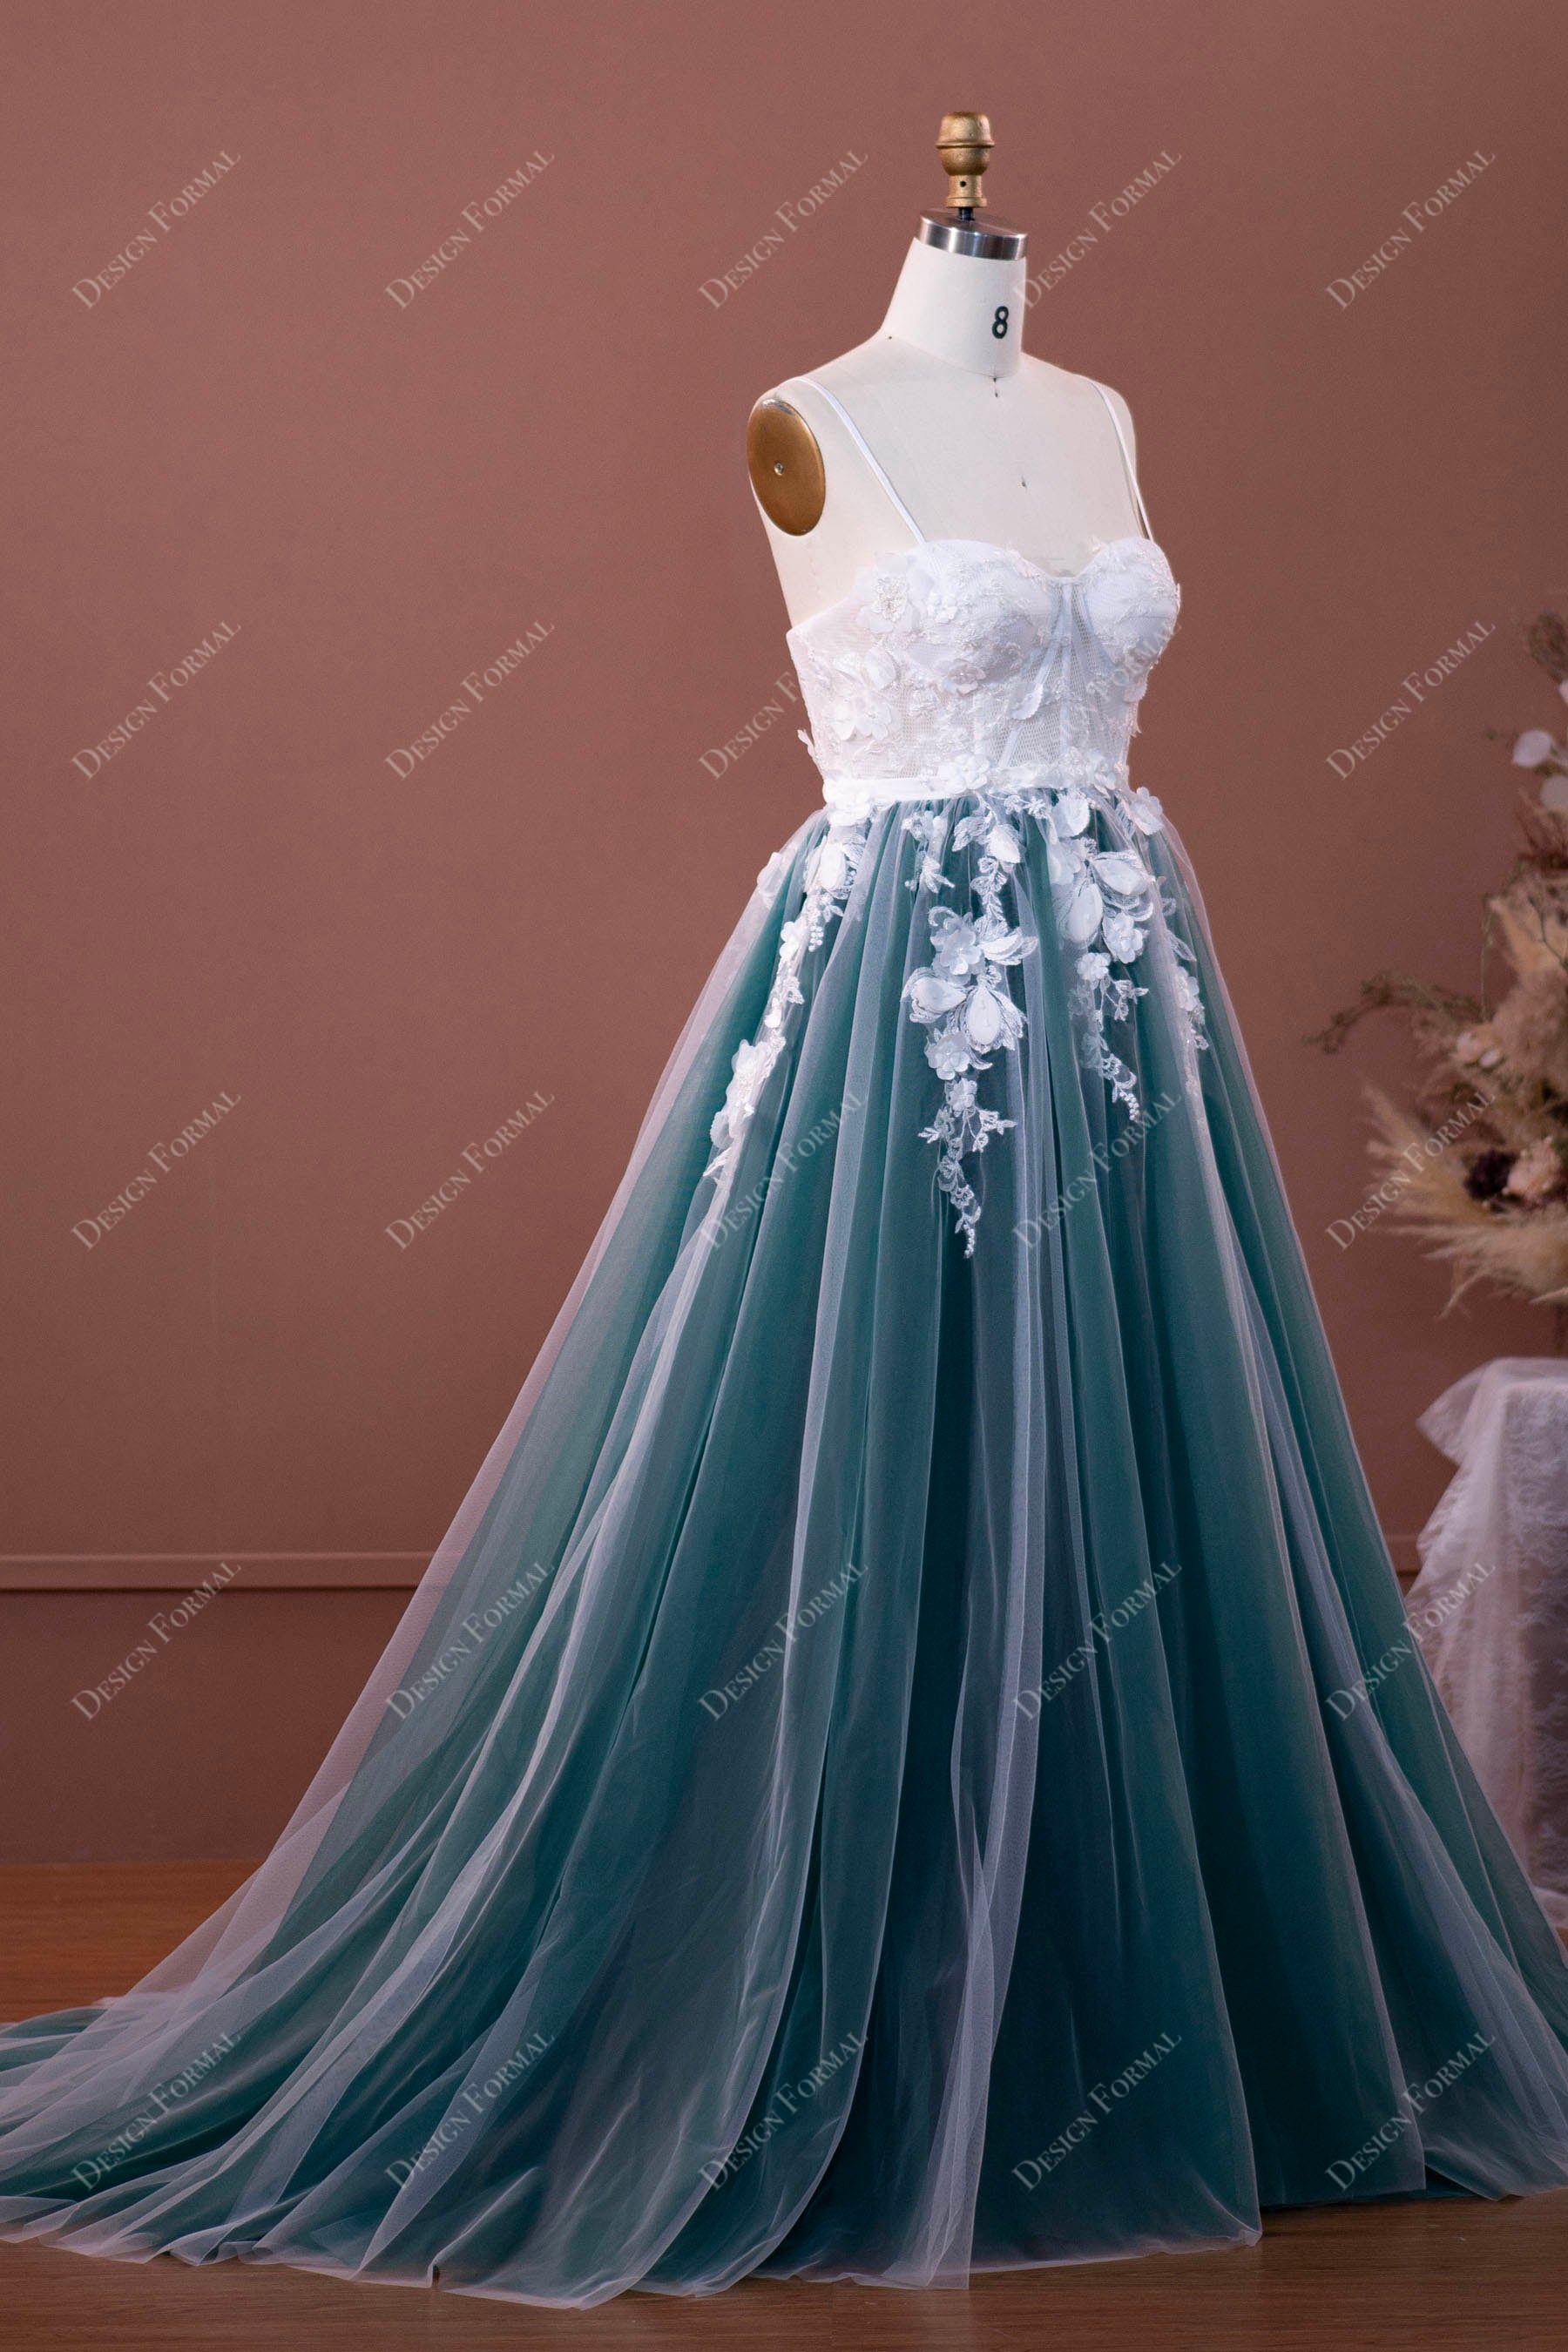 stylish green sleeveless unique wedding ball gown